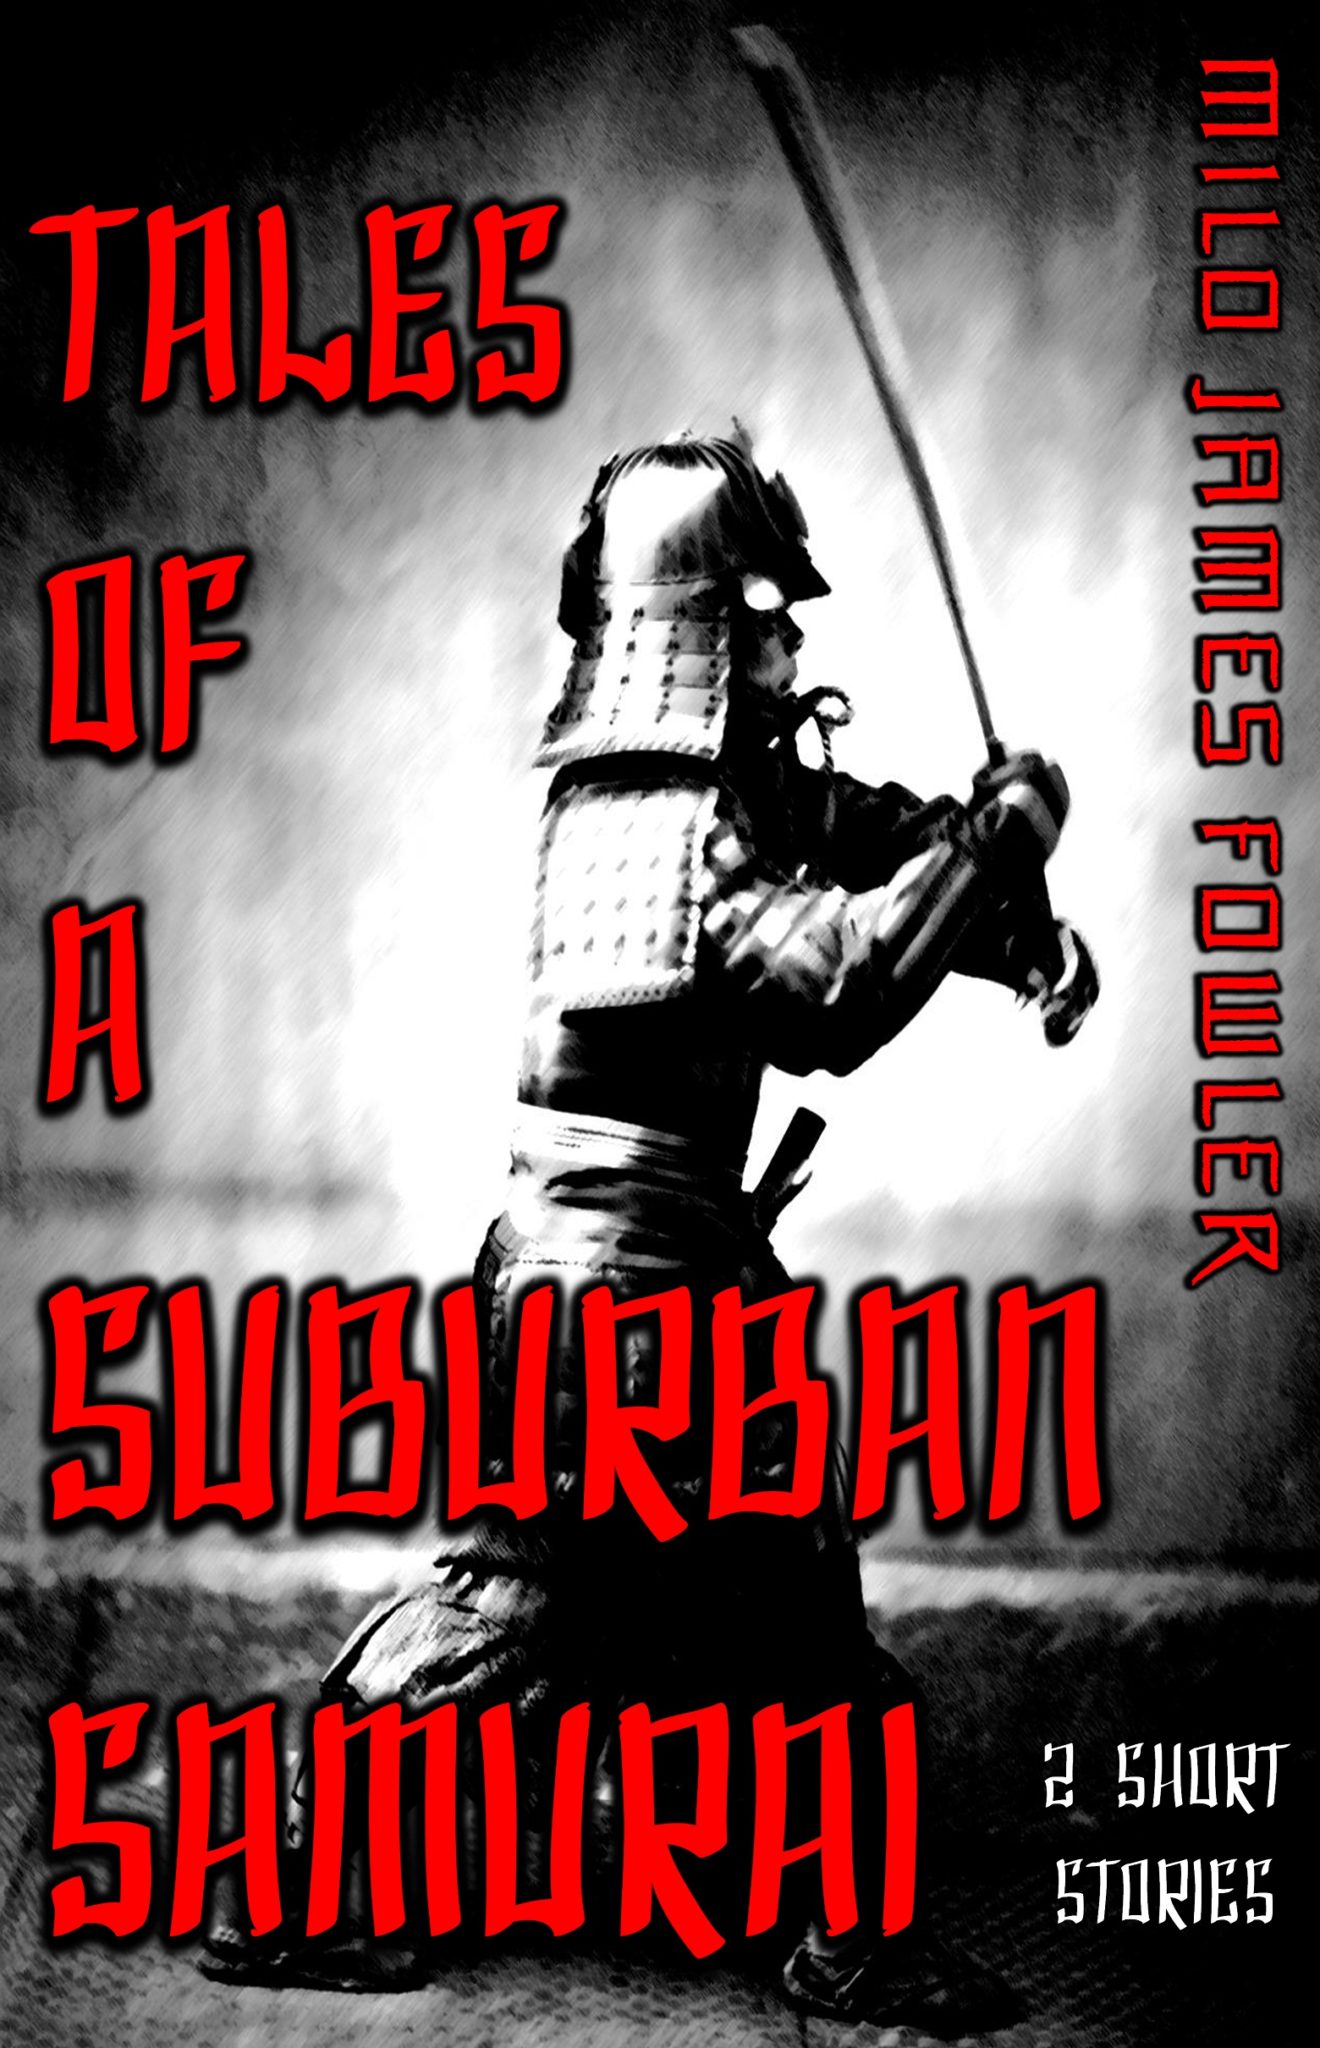 Tales of a Suburban Samurai by Milo James Fowler